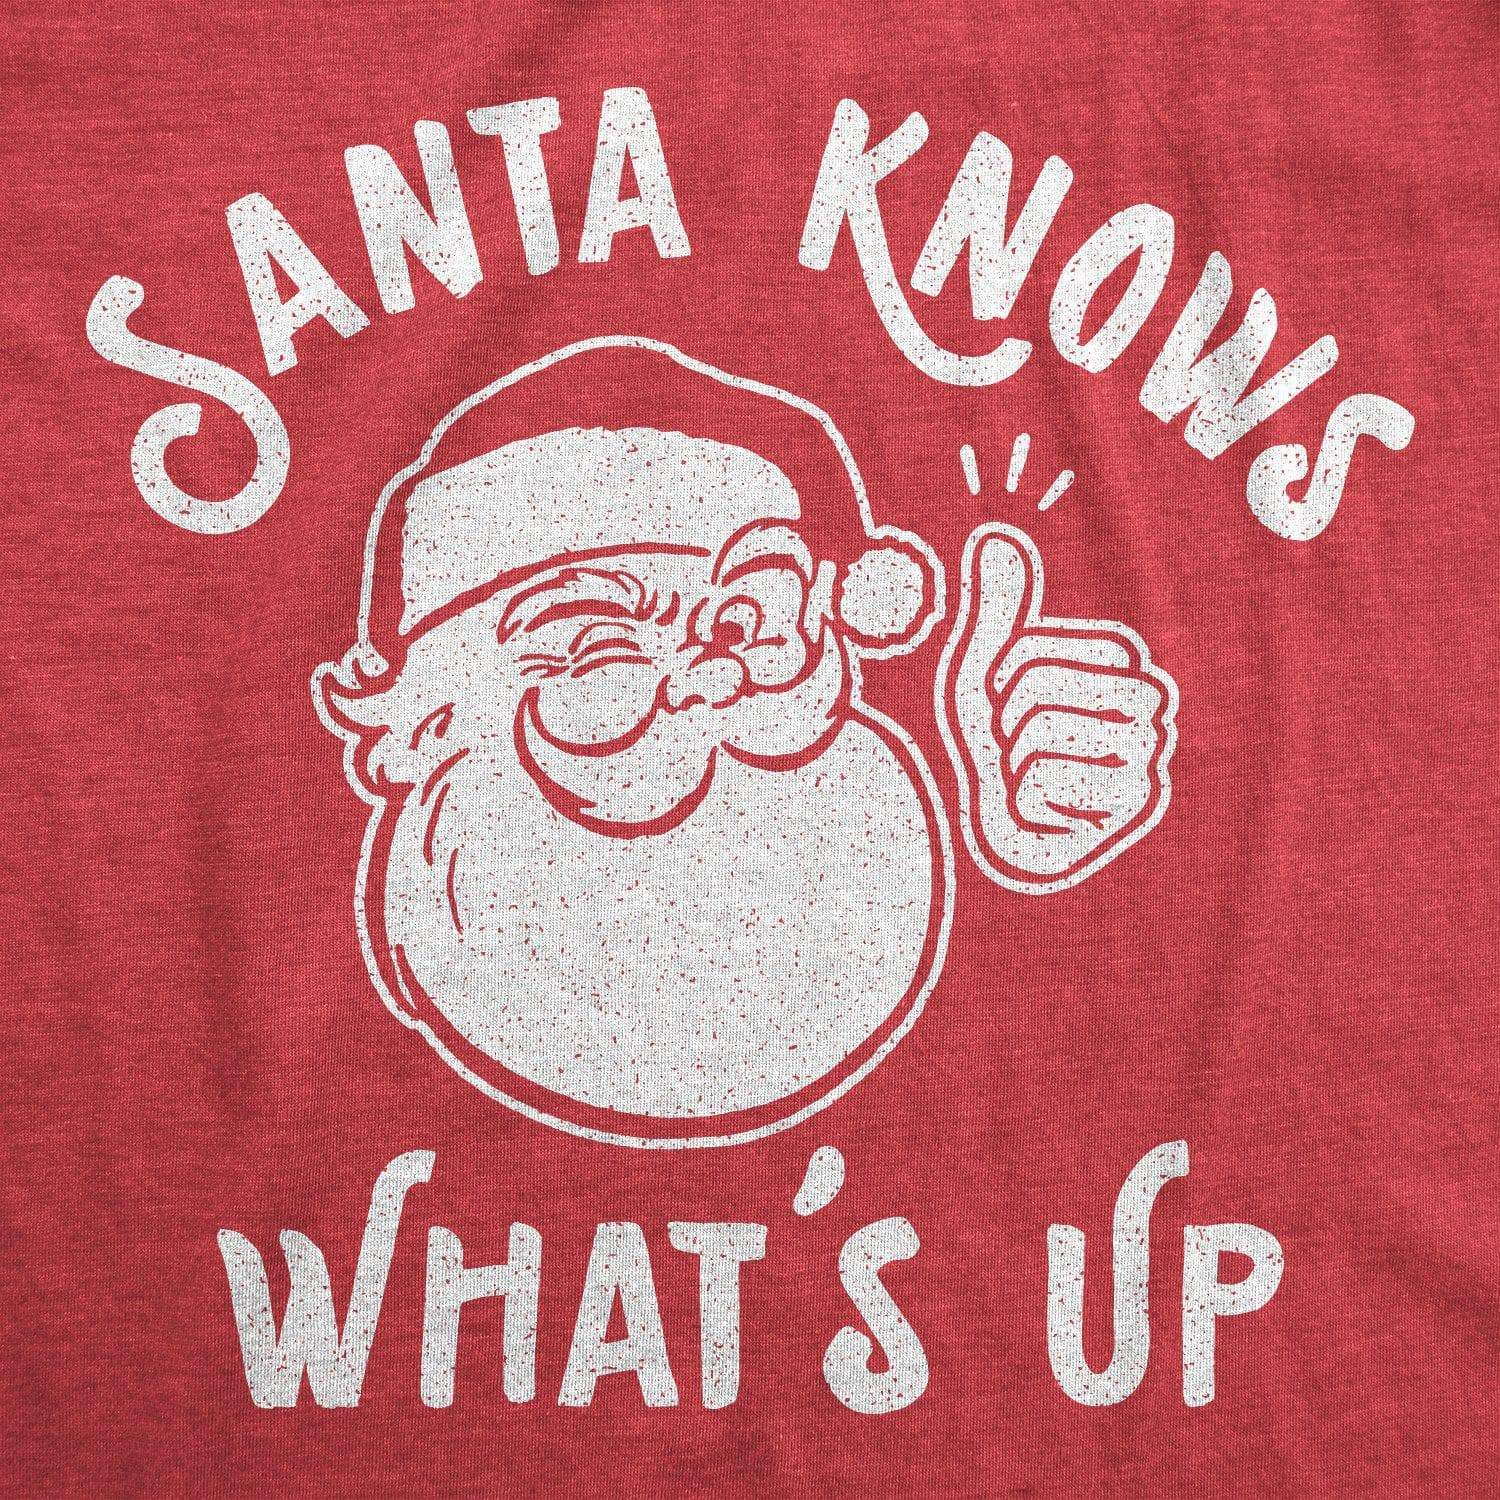 Santa Knows What's Up Men's Tshirt - Crazy Dog T-Shirts